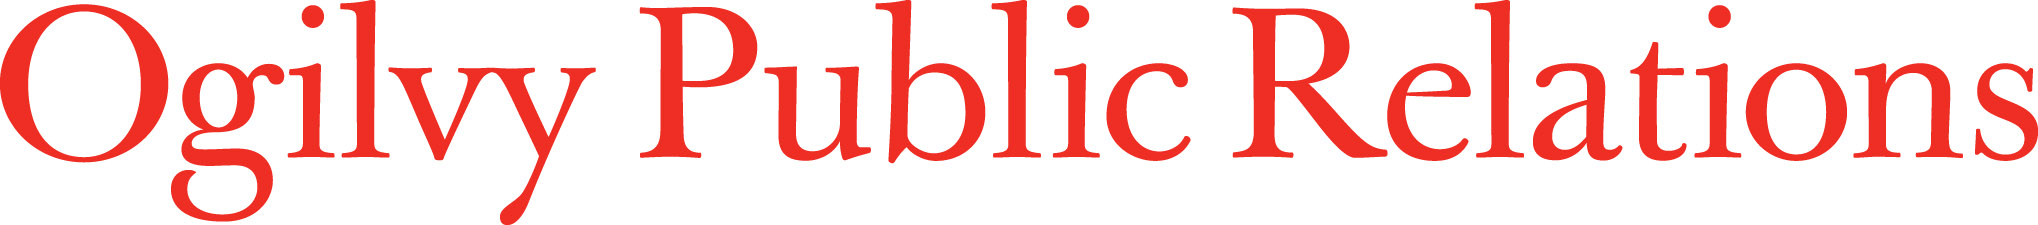  Best Digital Public Relations Business Logo: Ogilvy Public Relations